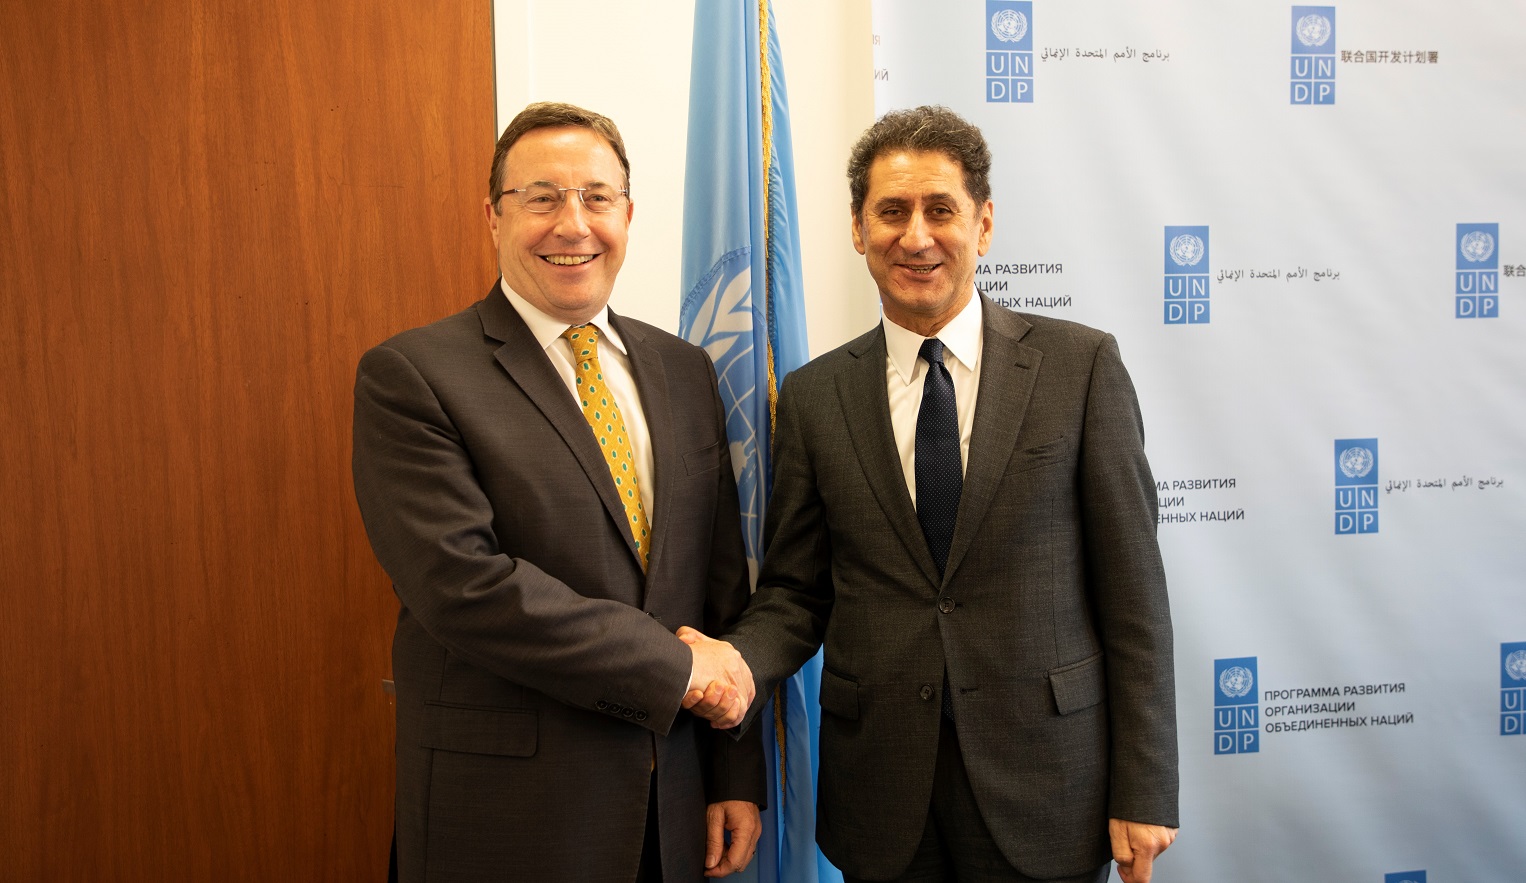 UNDP and IRENA partnership